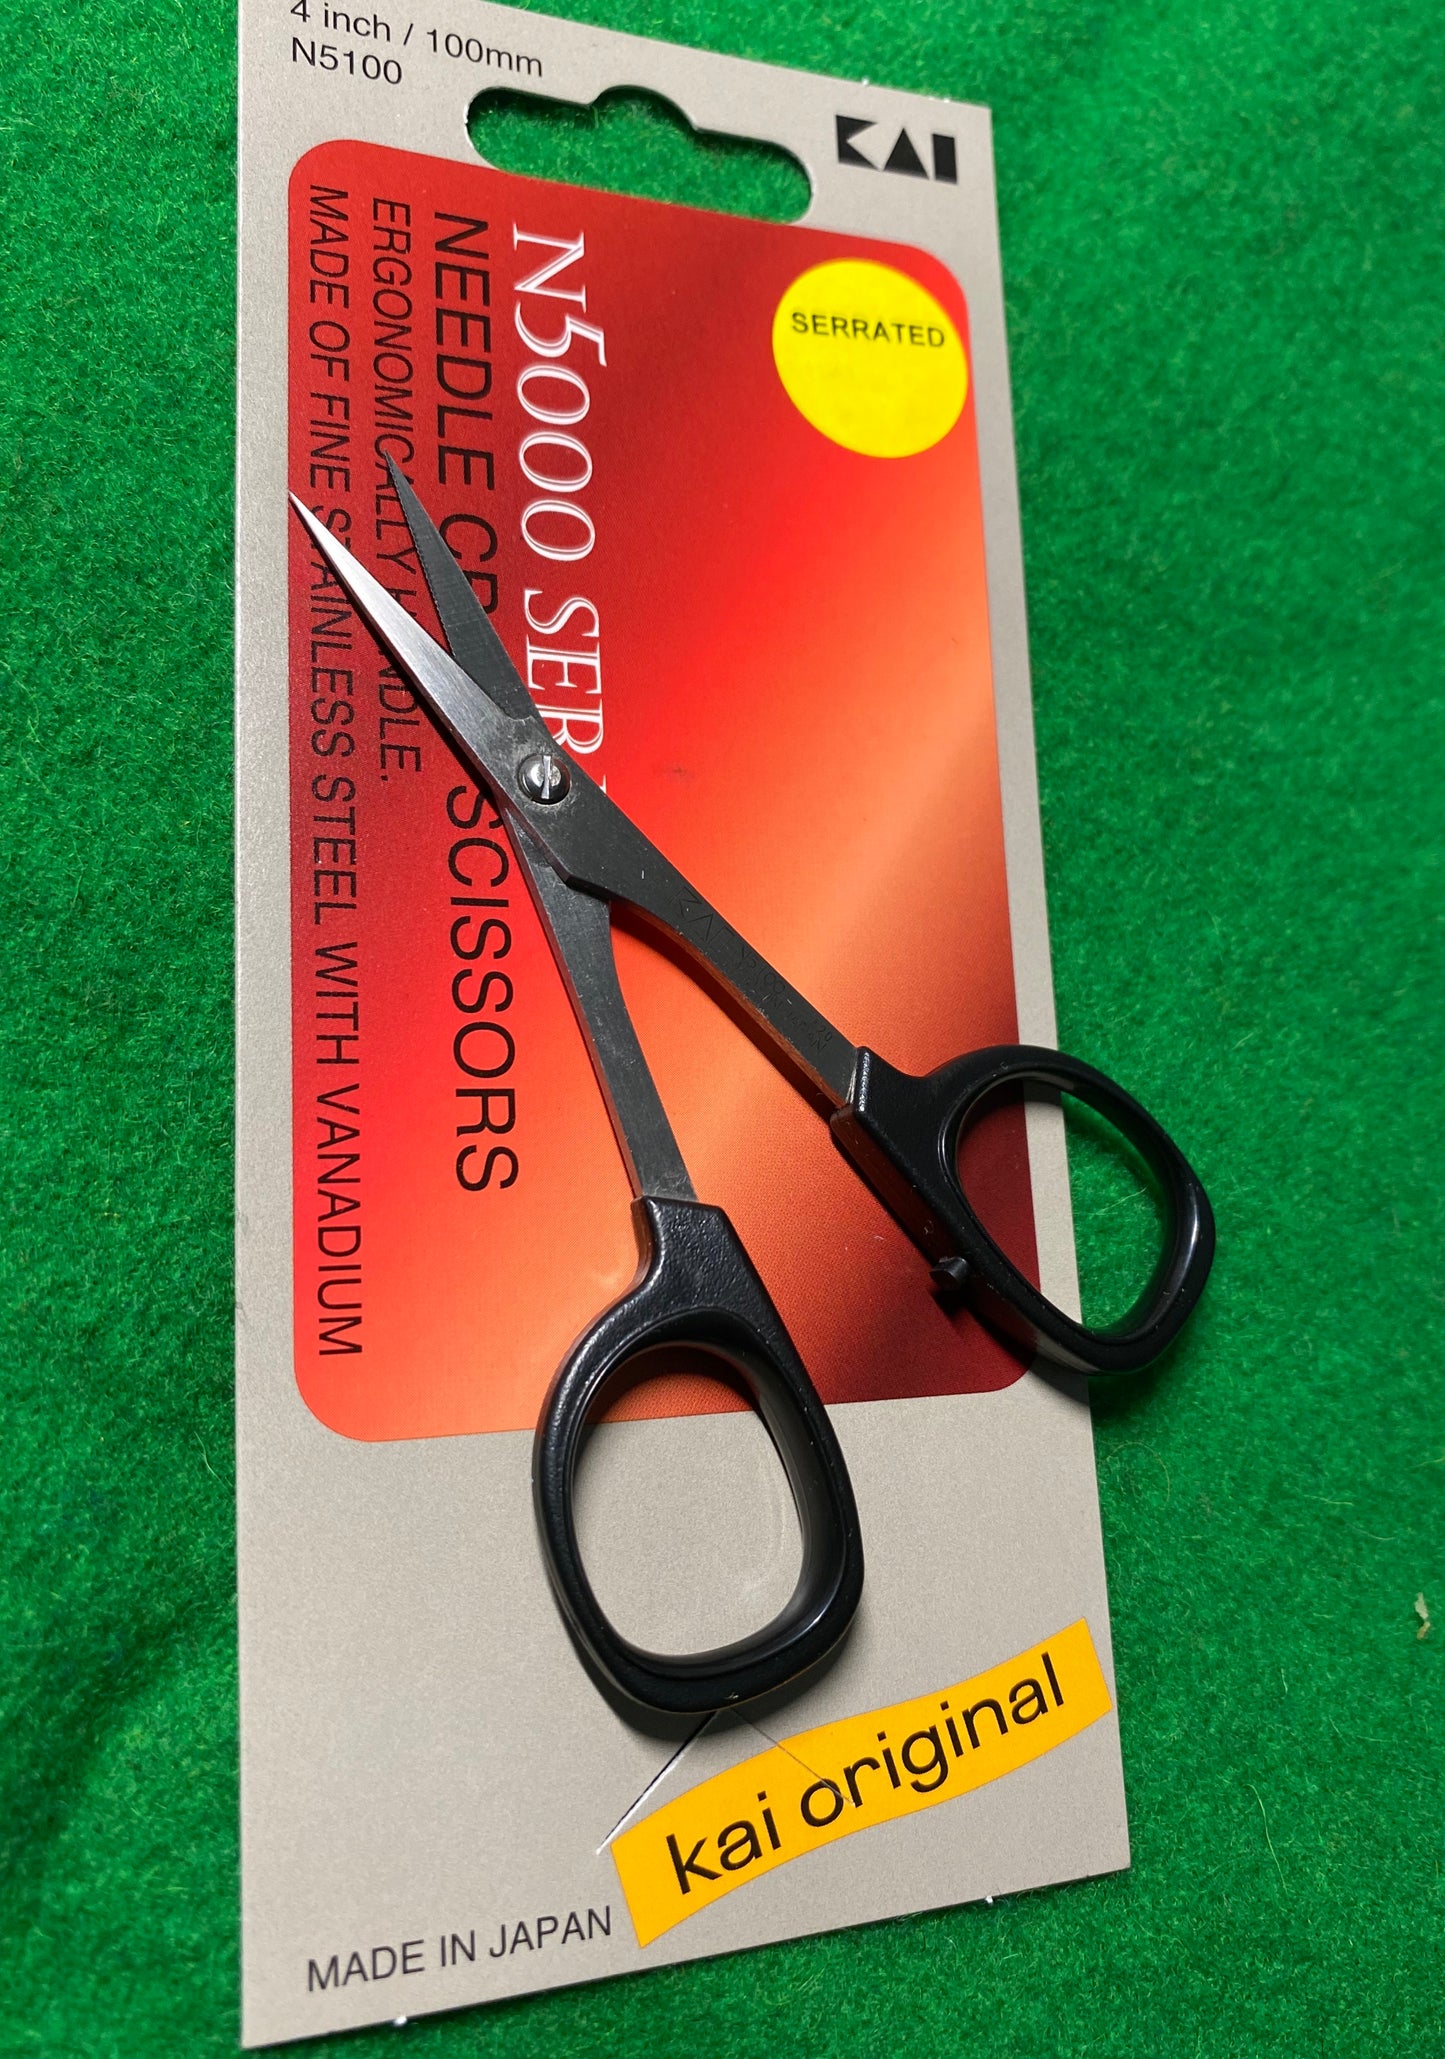 Kai 4 in. Needle Crafts Serrated Straight Scissors